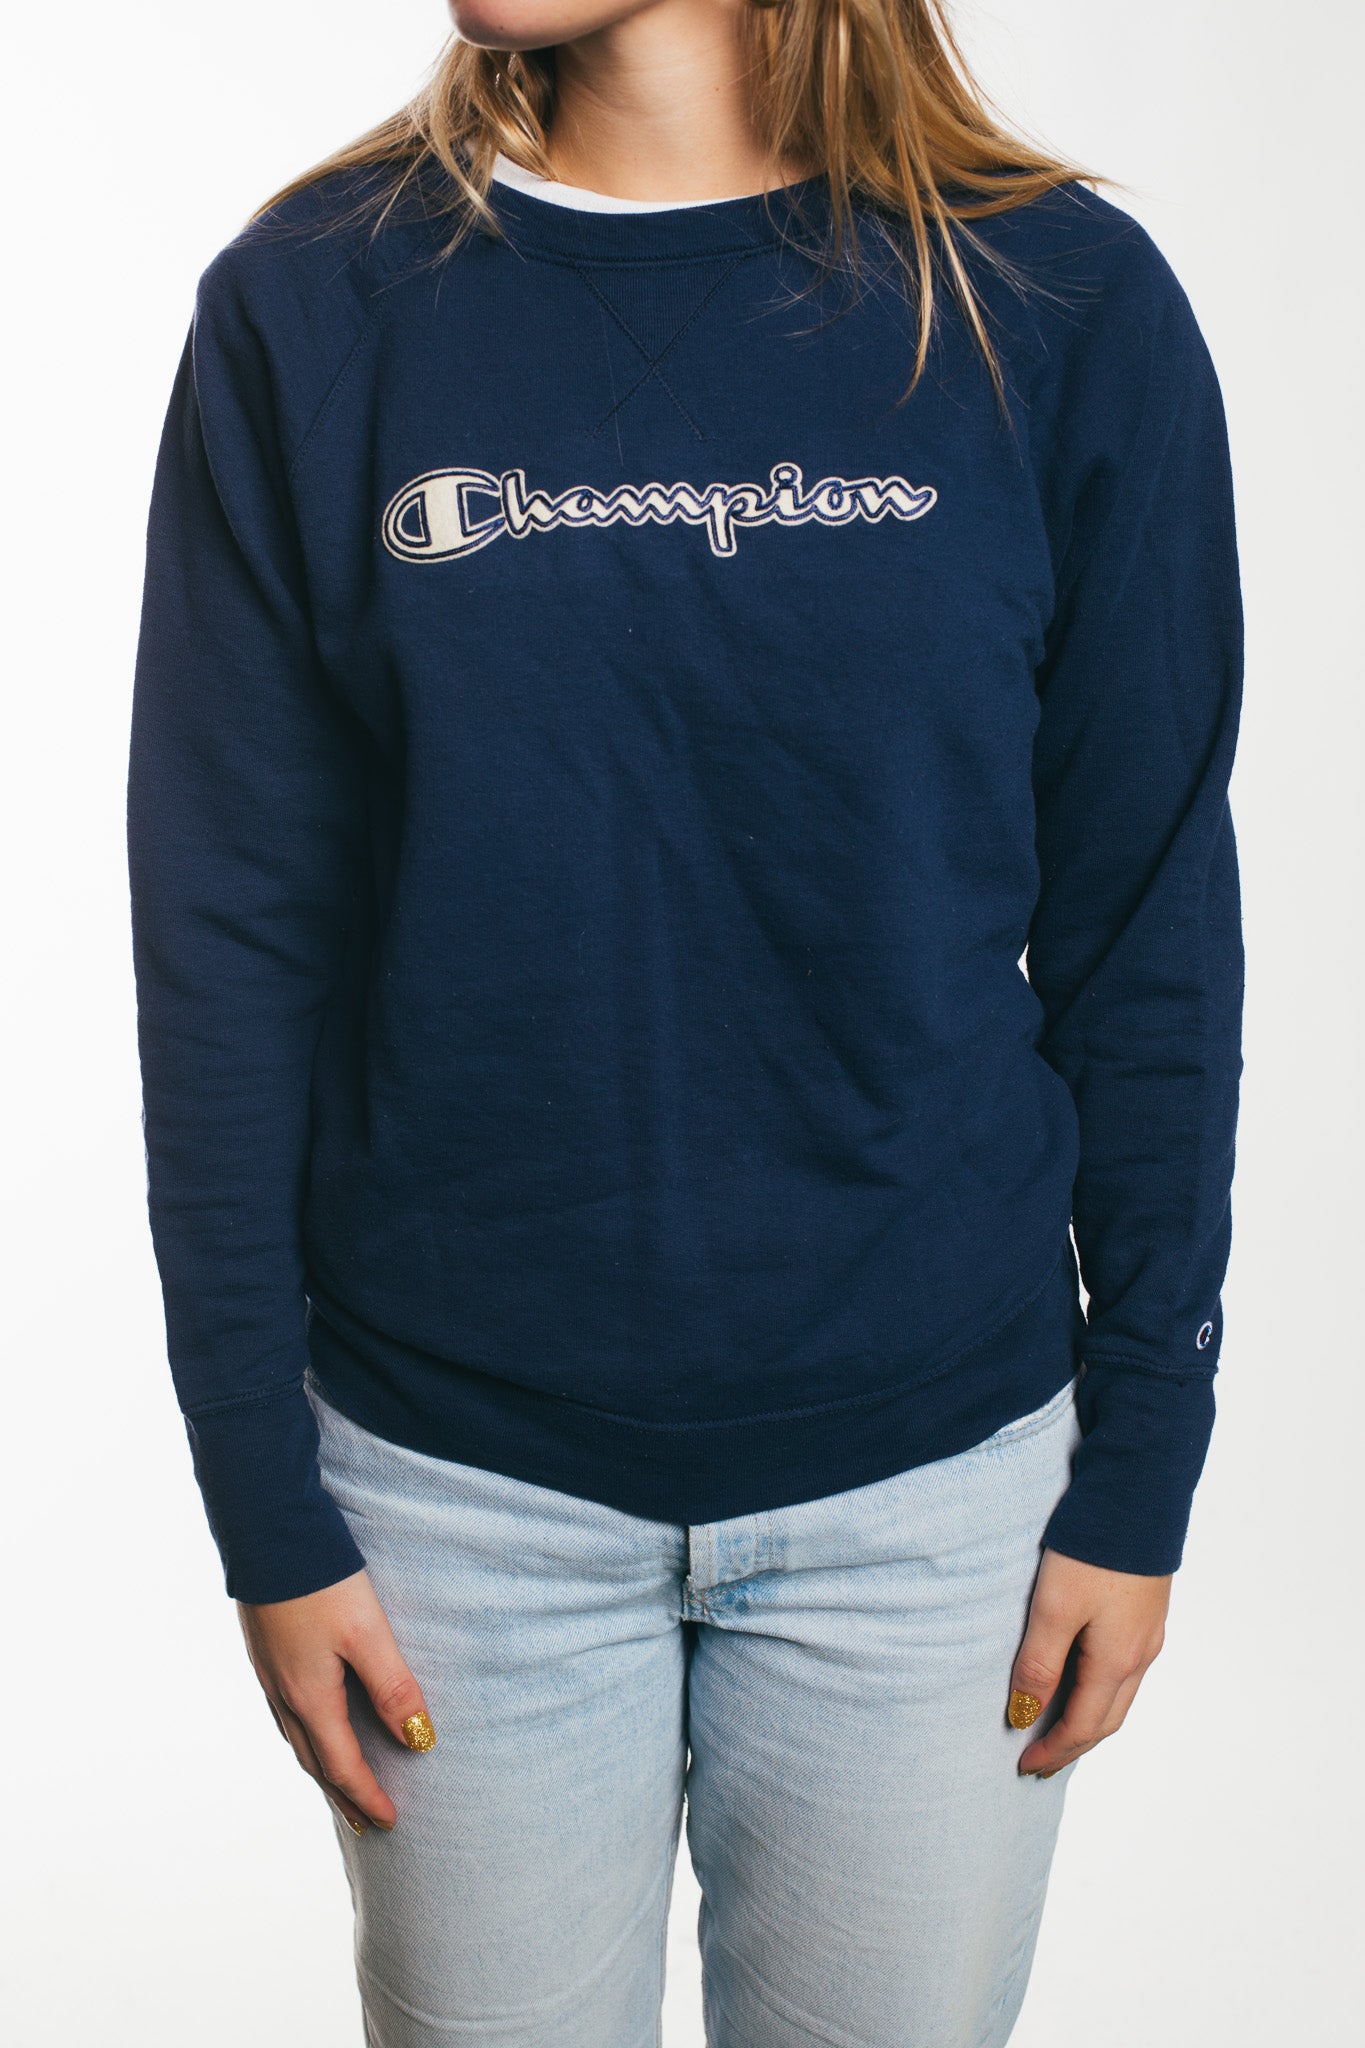 Champion - Sweatshirt